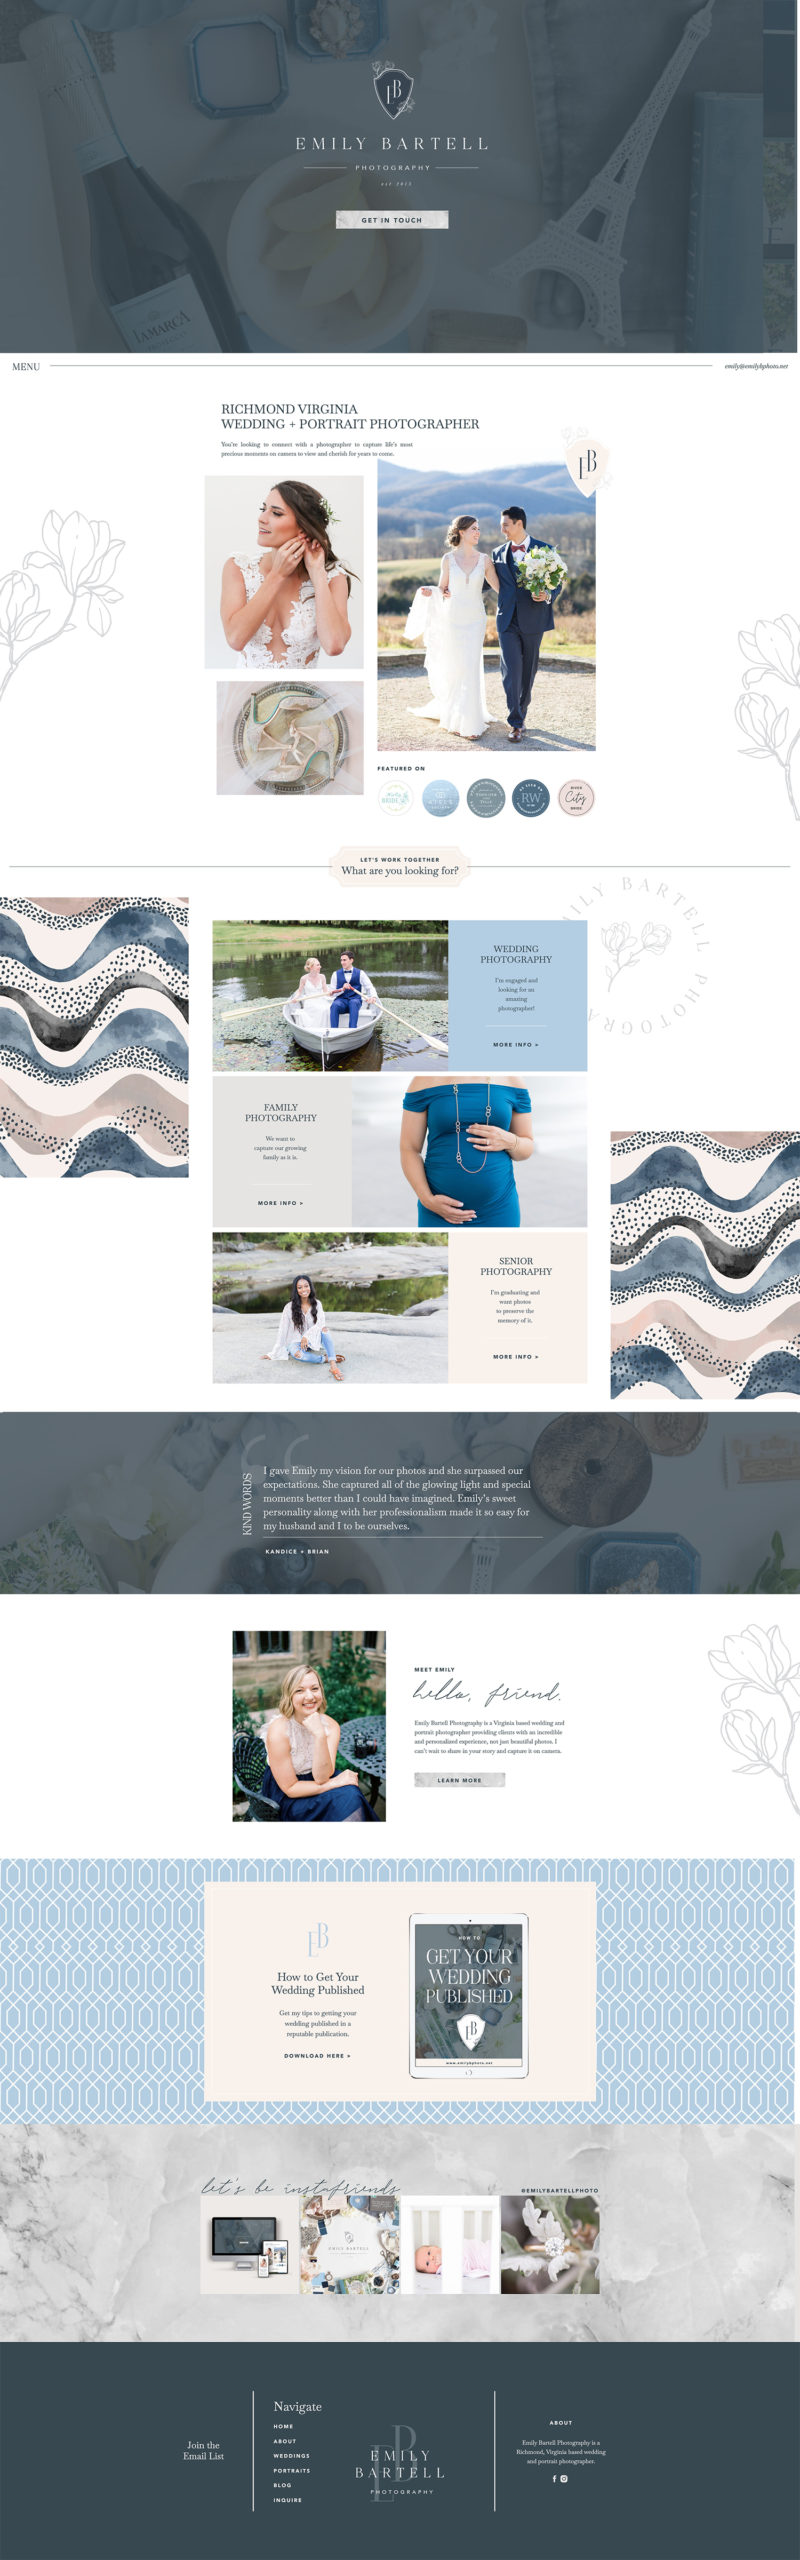 custom showit website / showit designer / wedding photographer website / branding for creatives and wedding businesses